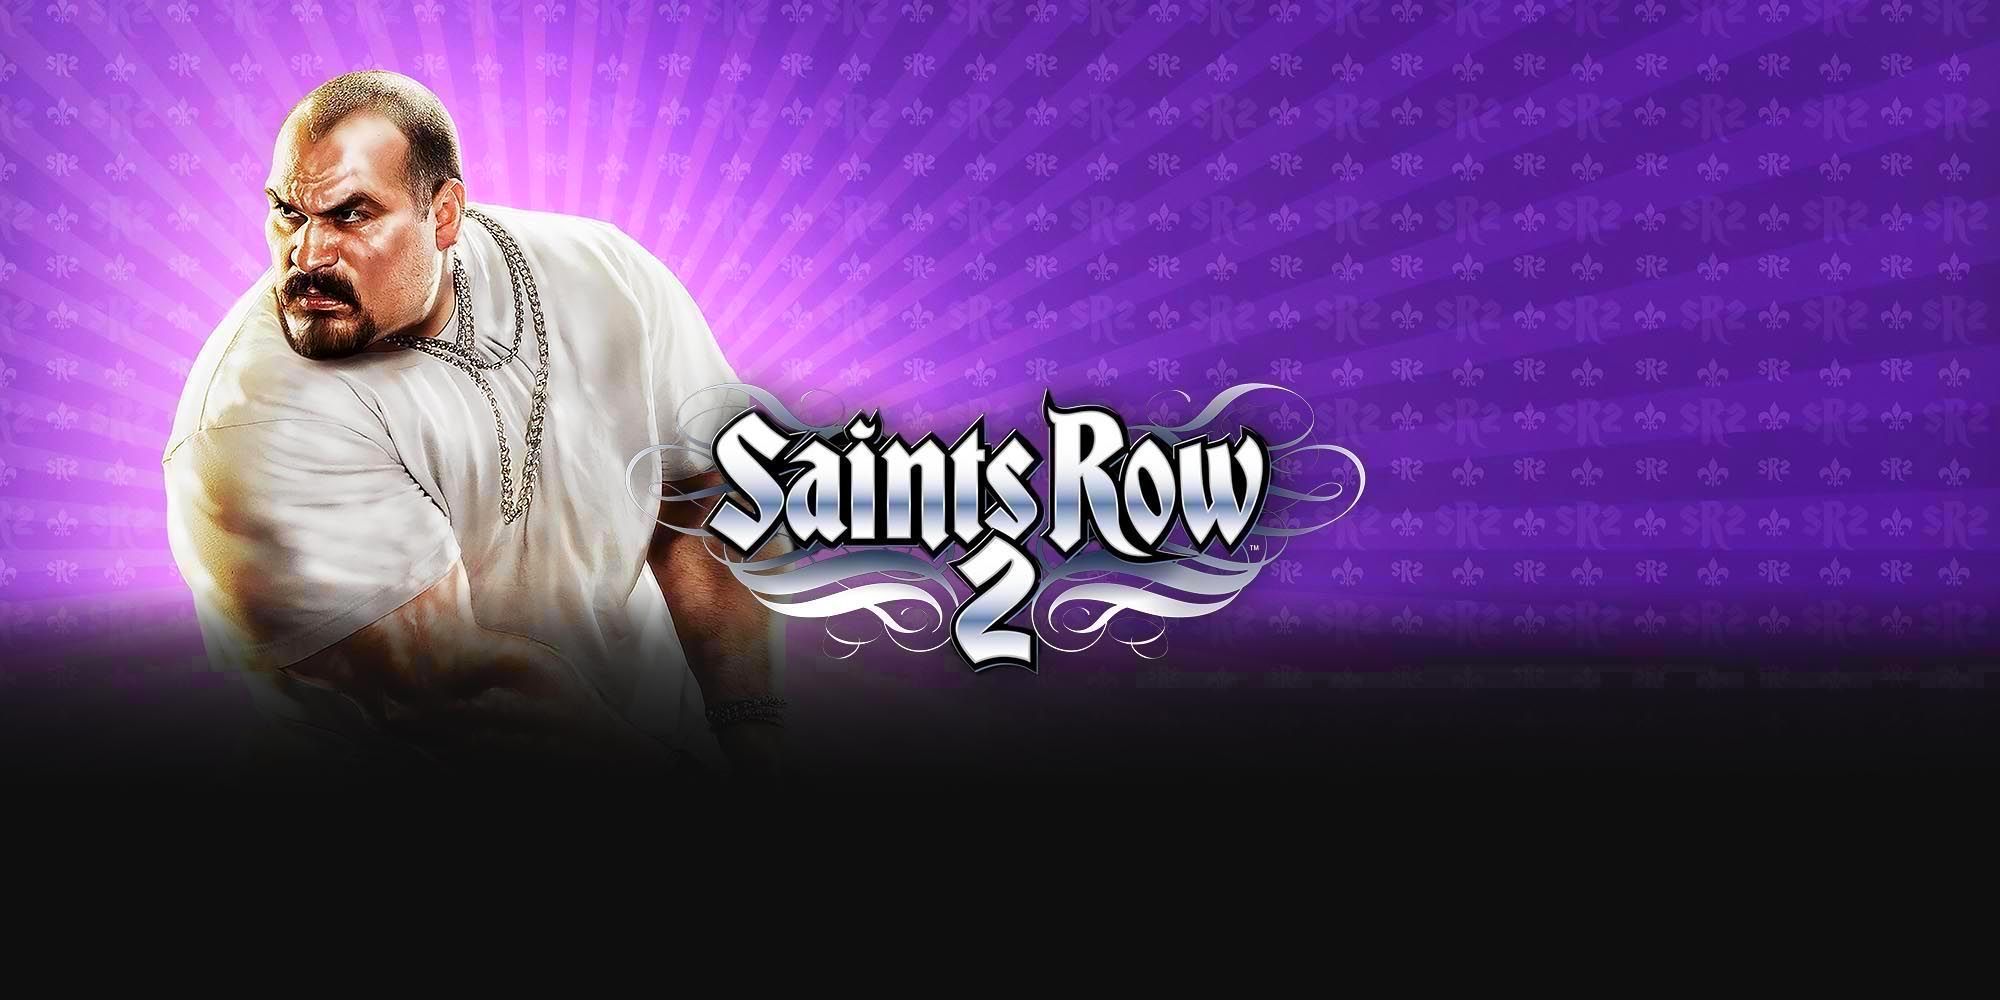 saintsrow 3 download free